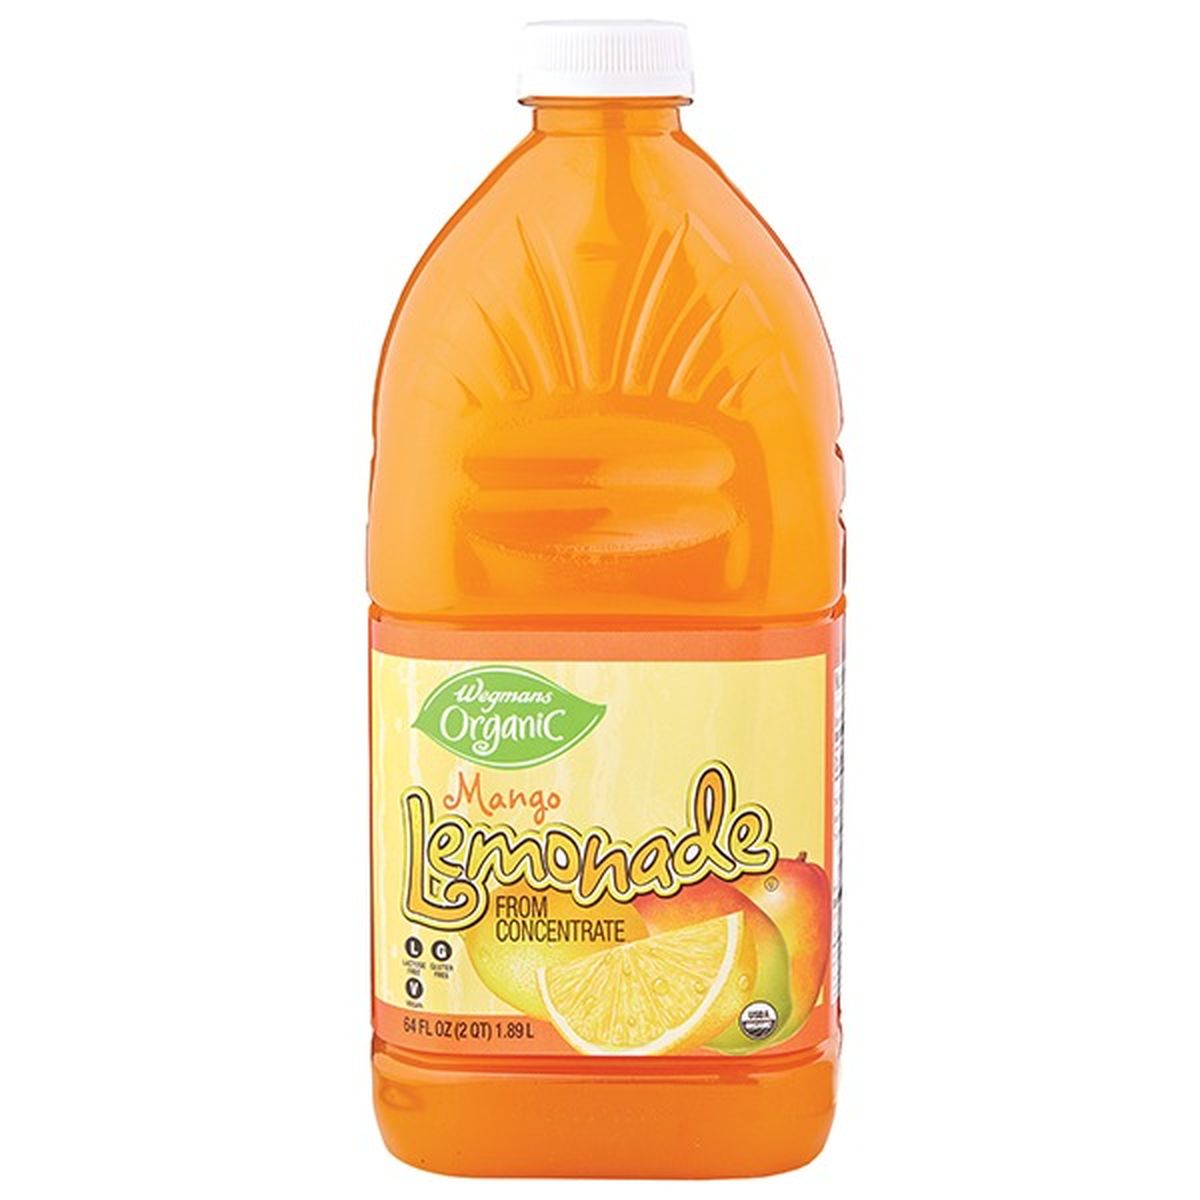 Calories in Wegmans Organic Lemonade, Mango